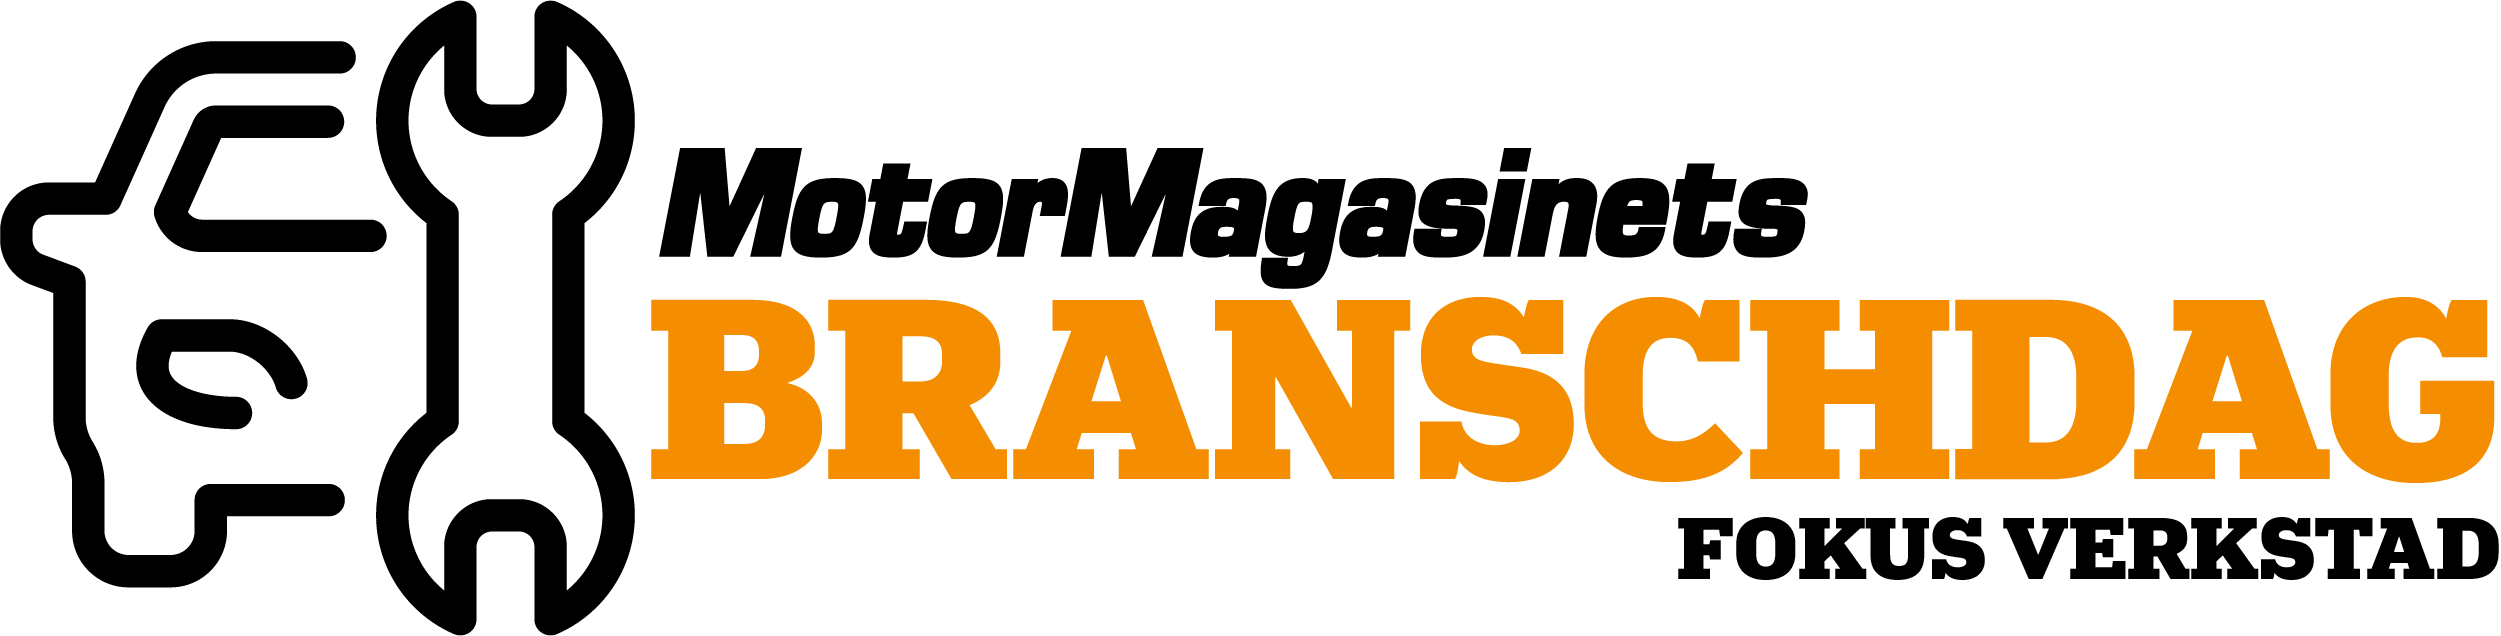 MM Branschdag_logo